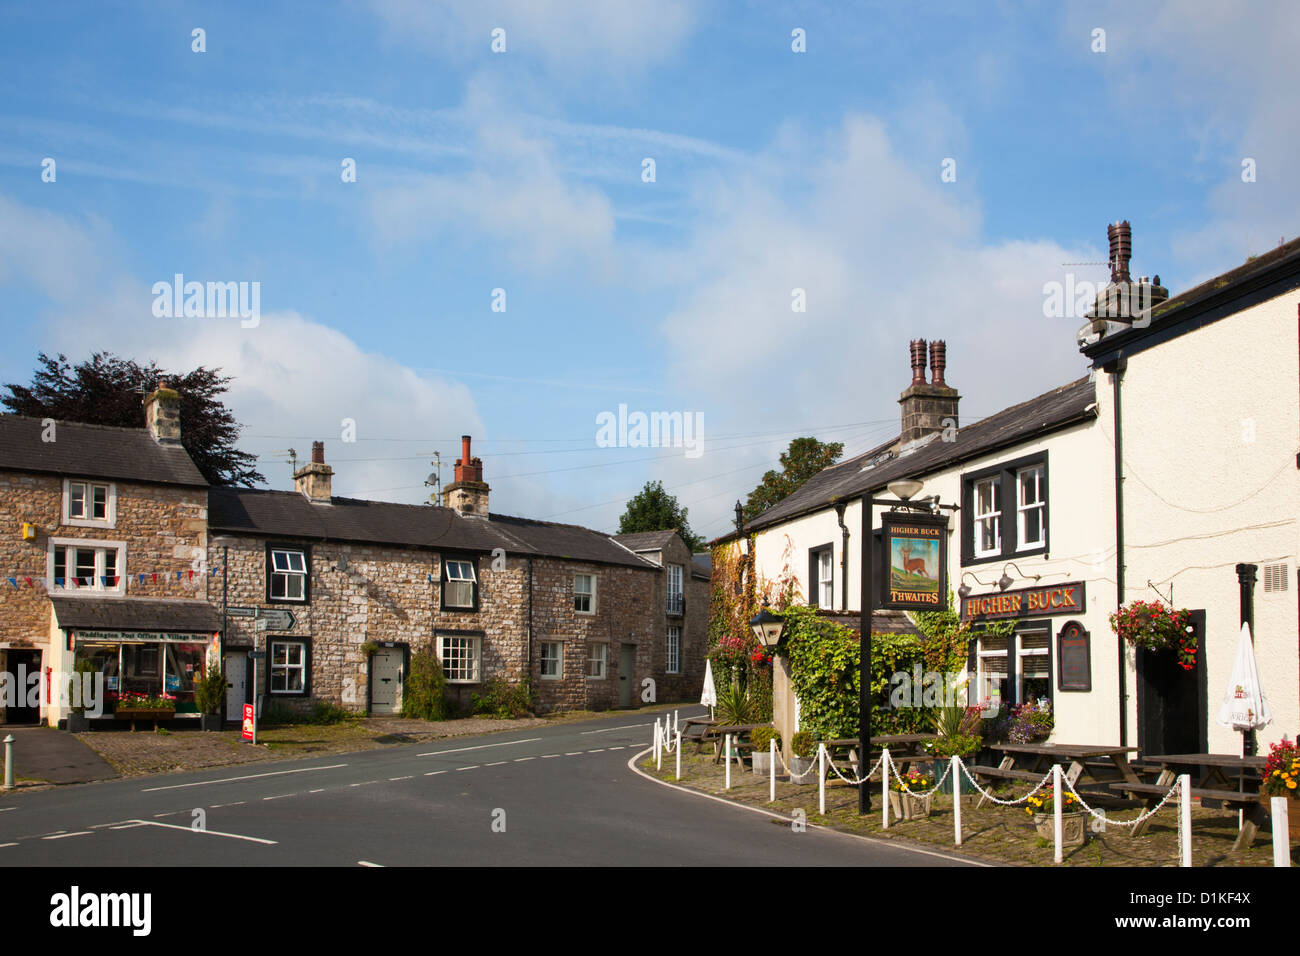 Village of Waddington in Lancashire showing village post office and Higher Buck inn. Stock Photo